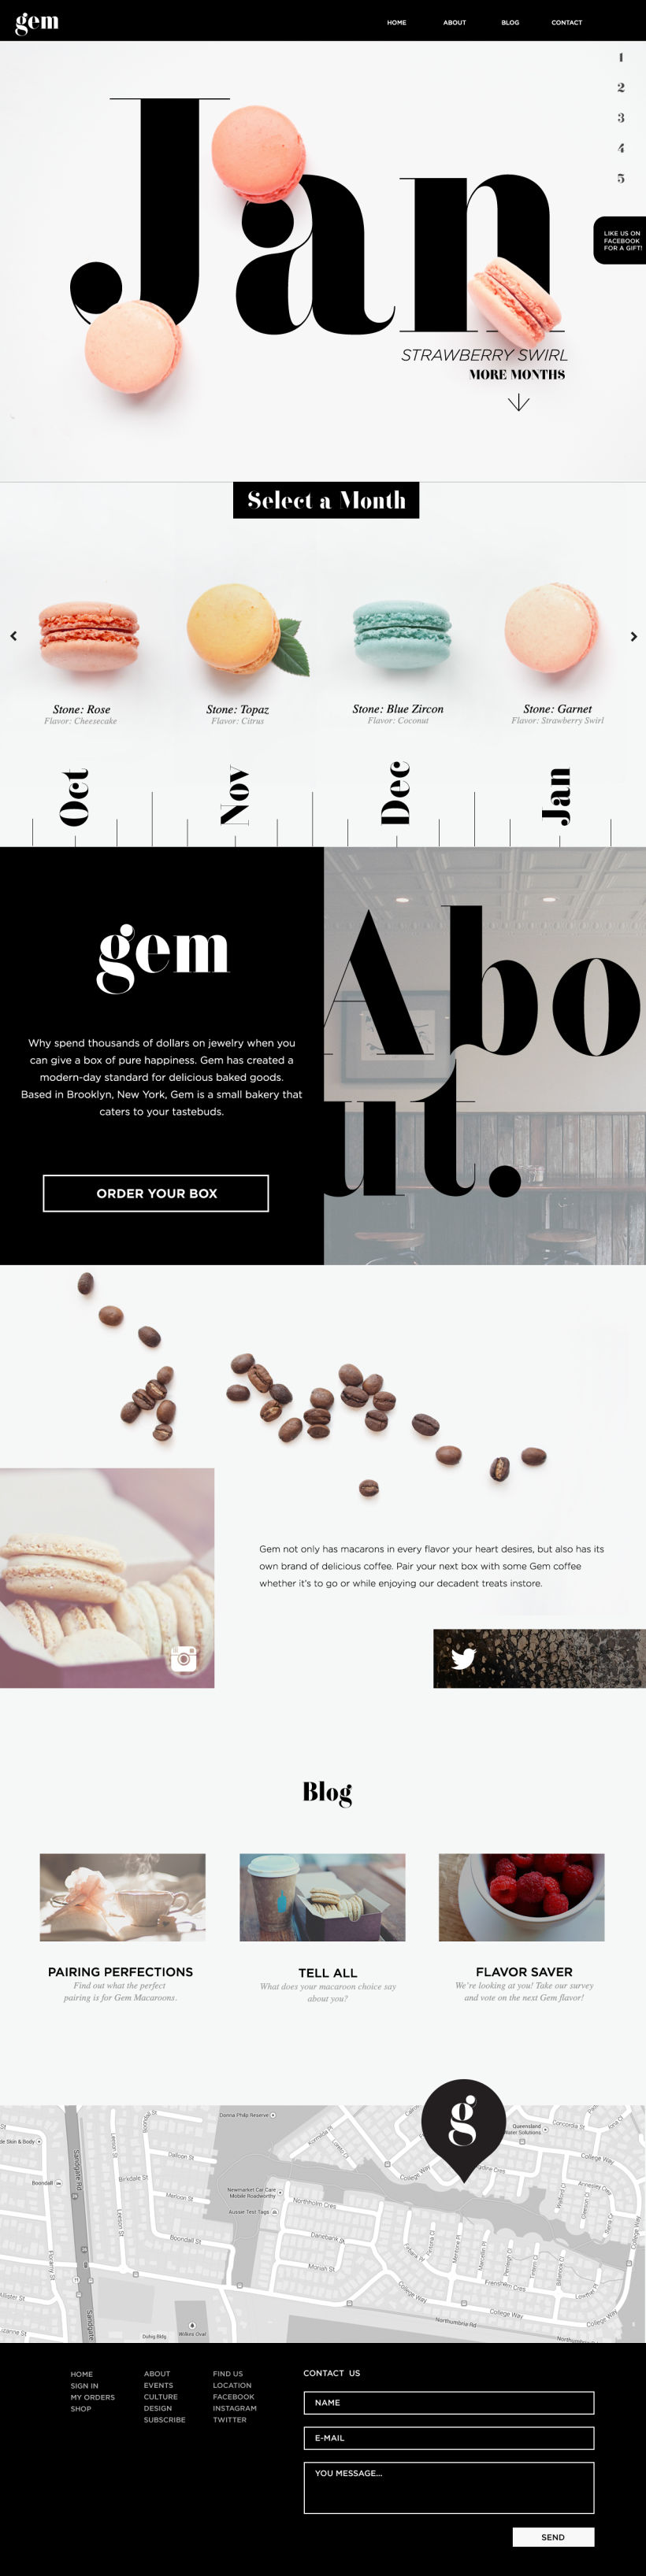 Gem Bakery Website 4